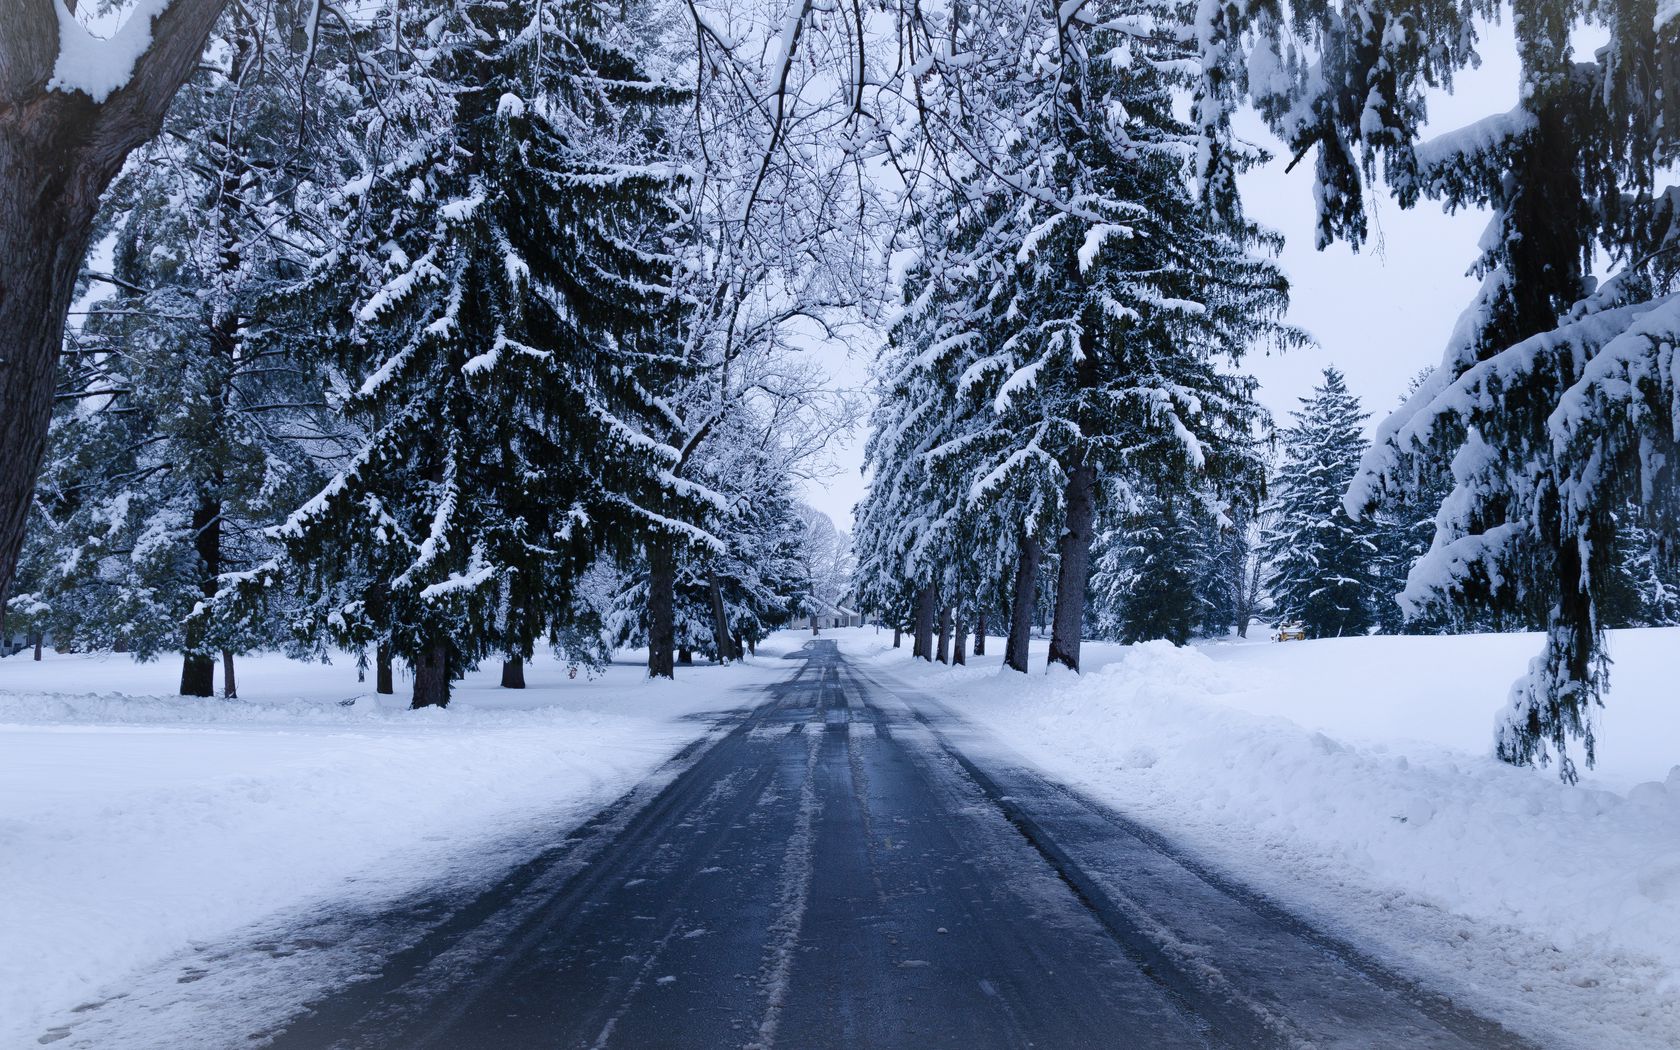 Download wallpaper 1680x1050 winter, road, snow, trees, winter landscape widescreen 16:10 HD background